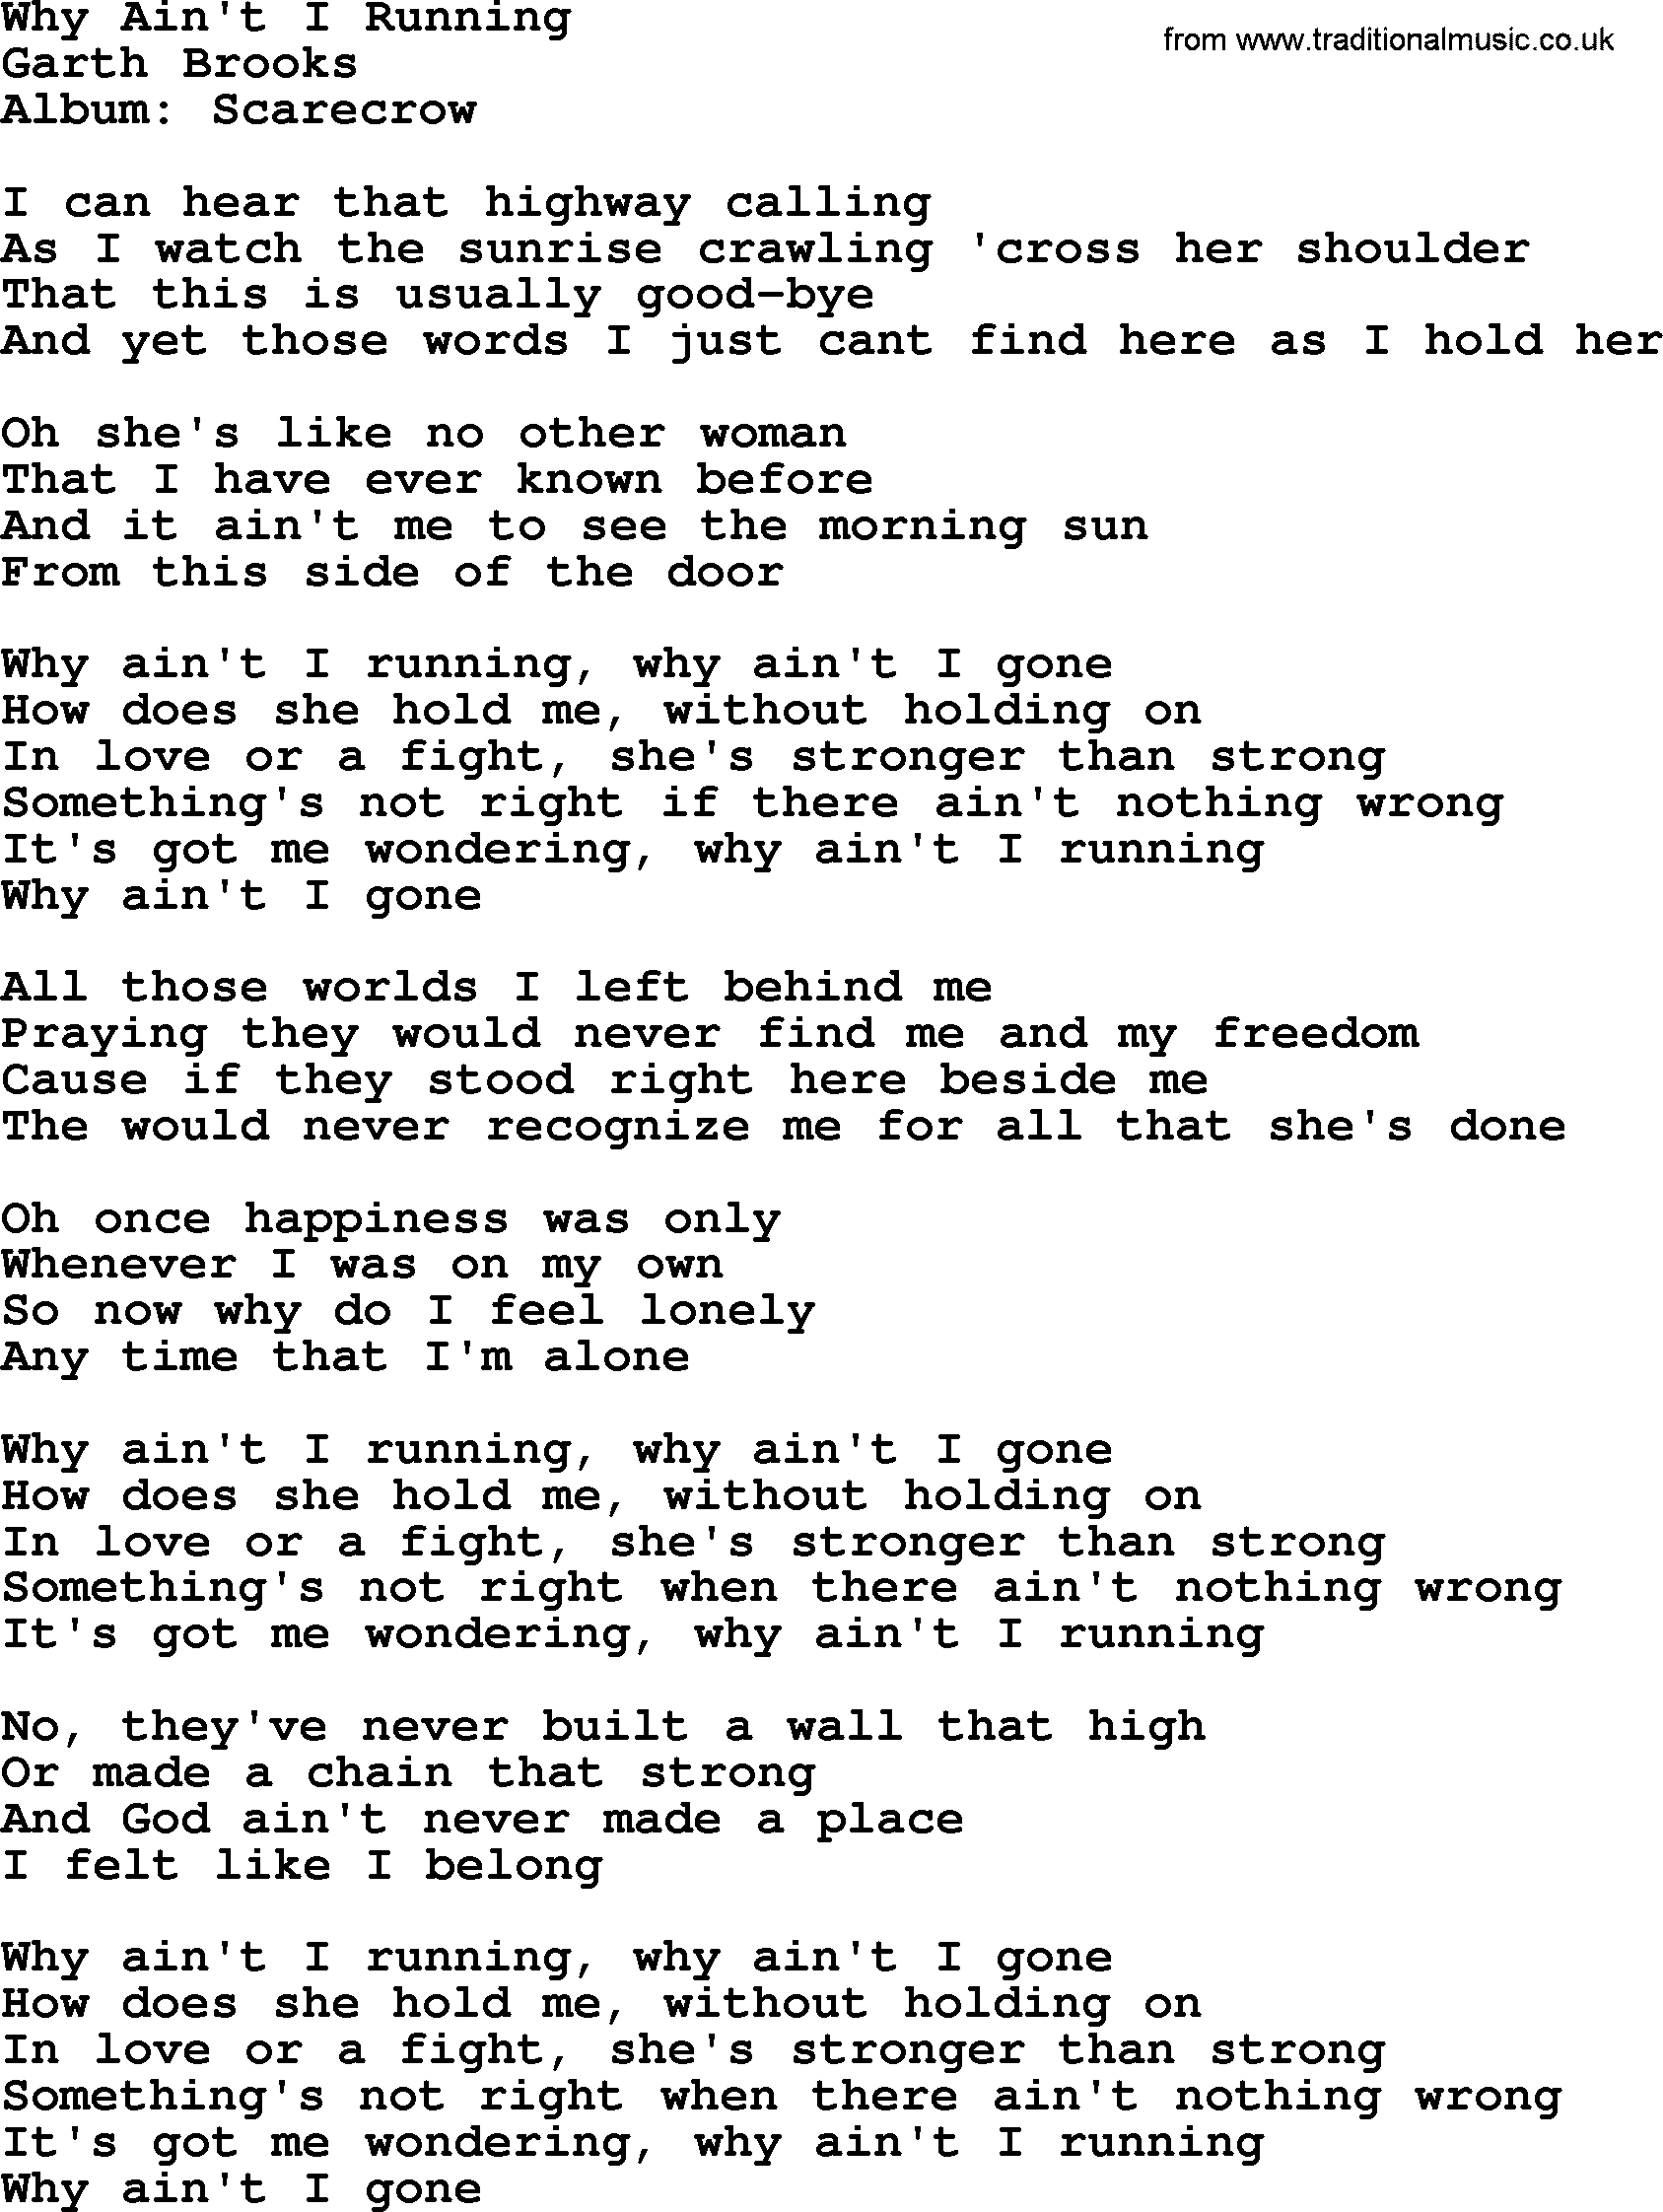 Why Ain't I Running, by Garth Brooks - lyrics